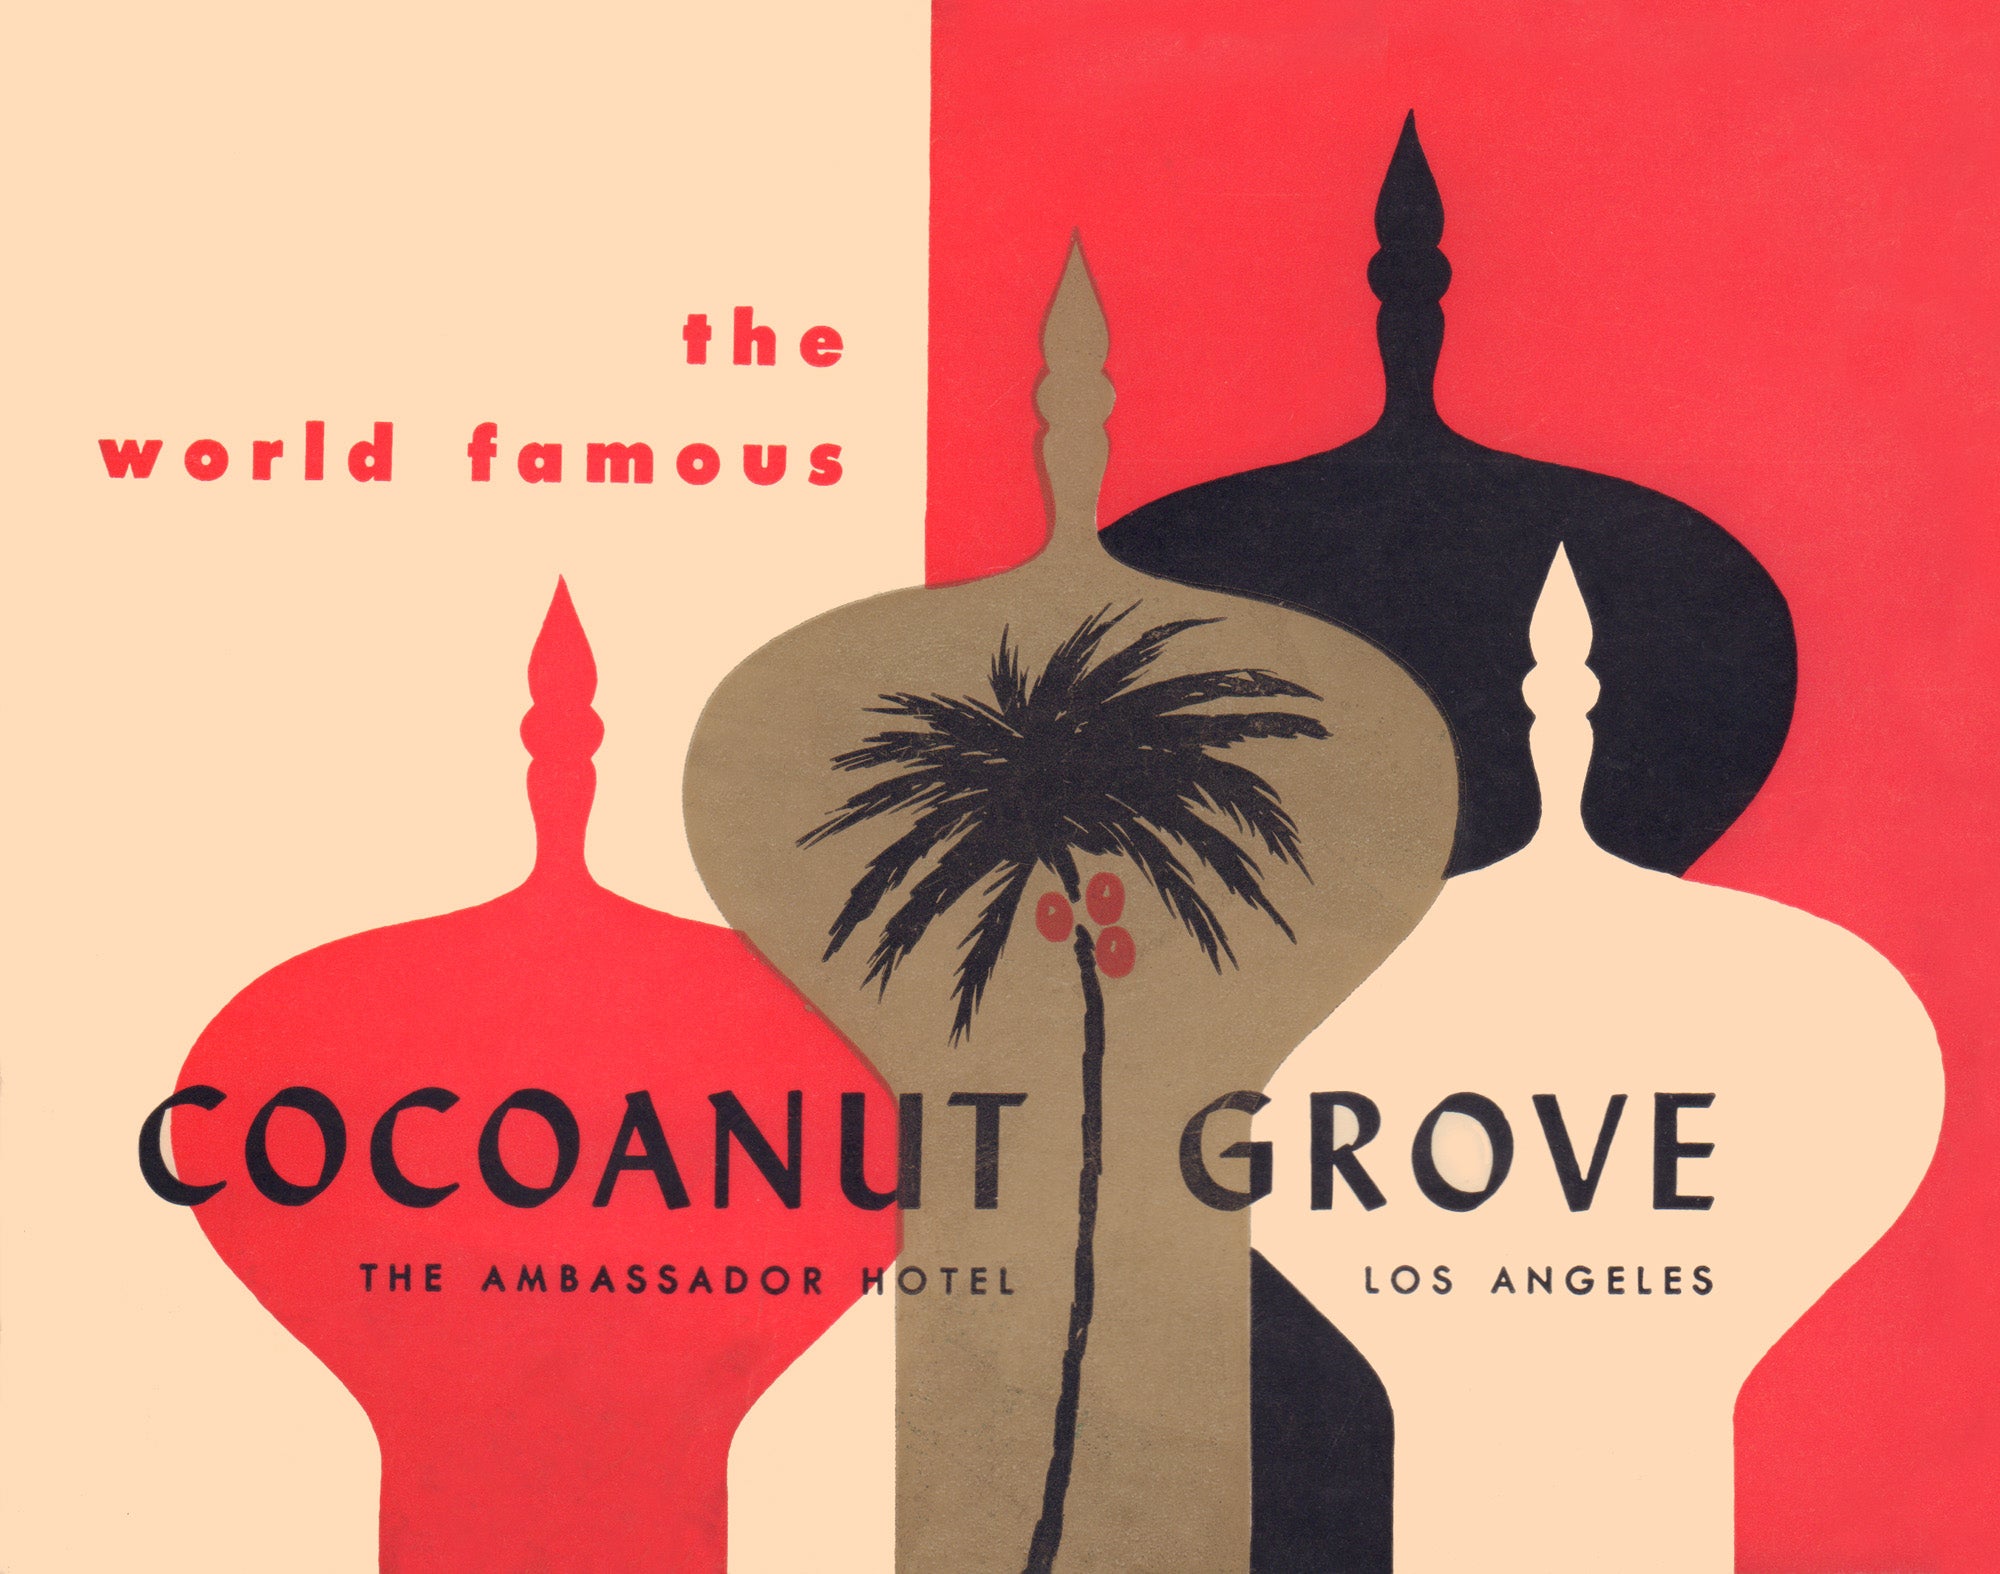 Cocoanut Grove Ambassador Hotel, Los Angeles 1964 | Vintage Menu Art - cover